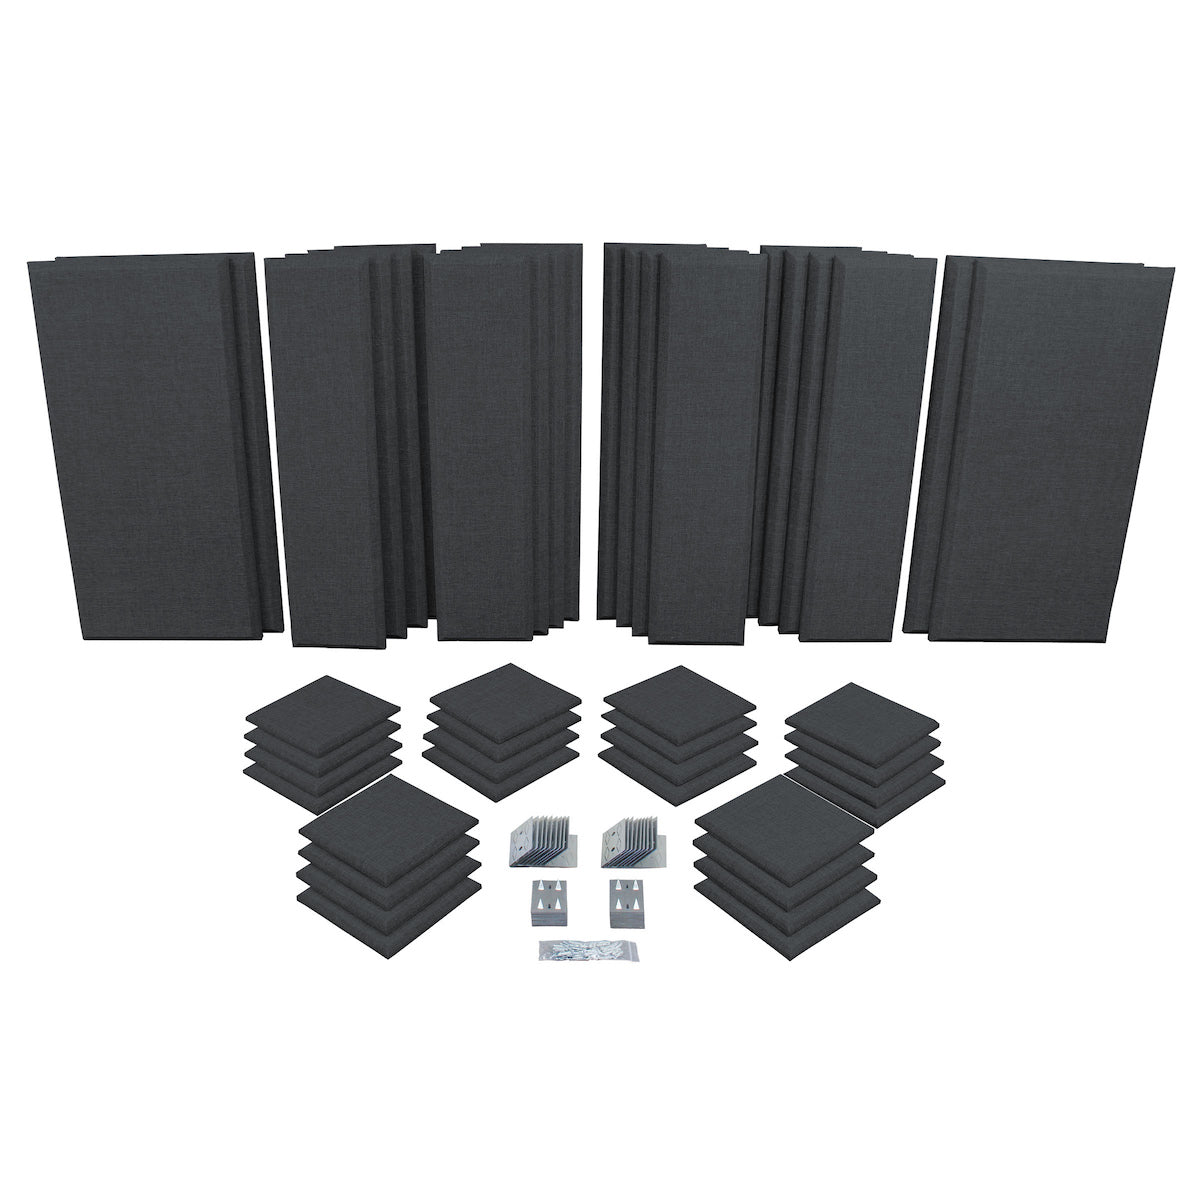 Primacoustic London 16 - Acoustic Panel Room Kit, black